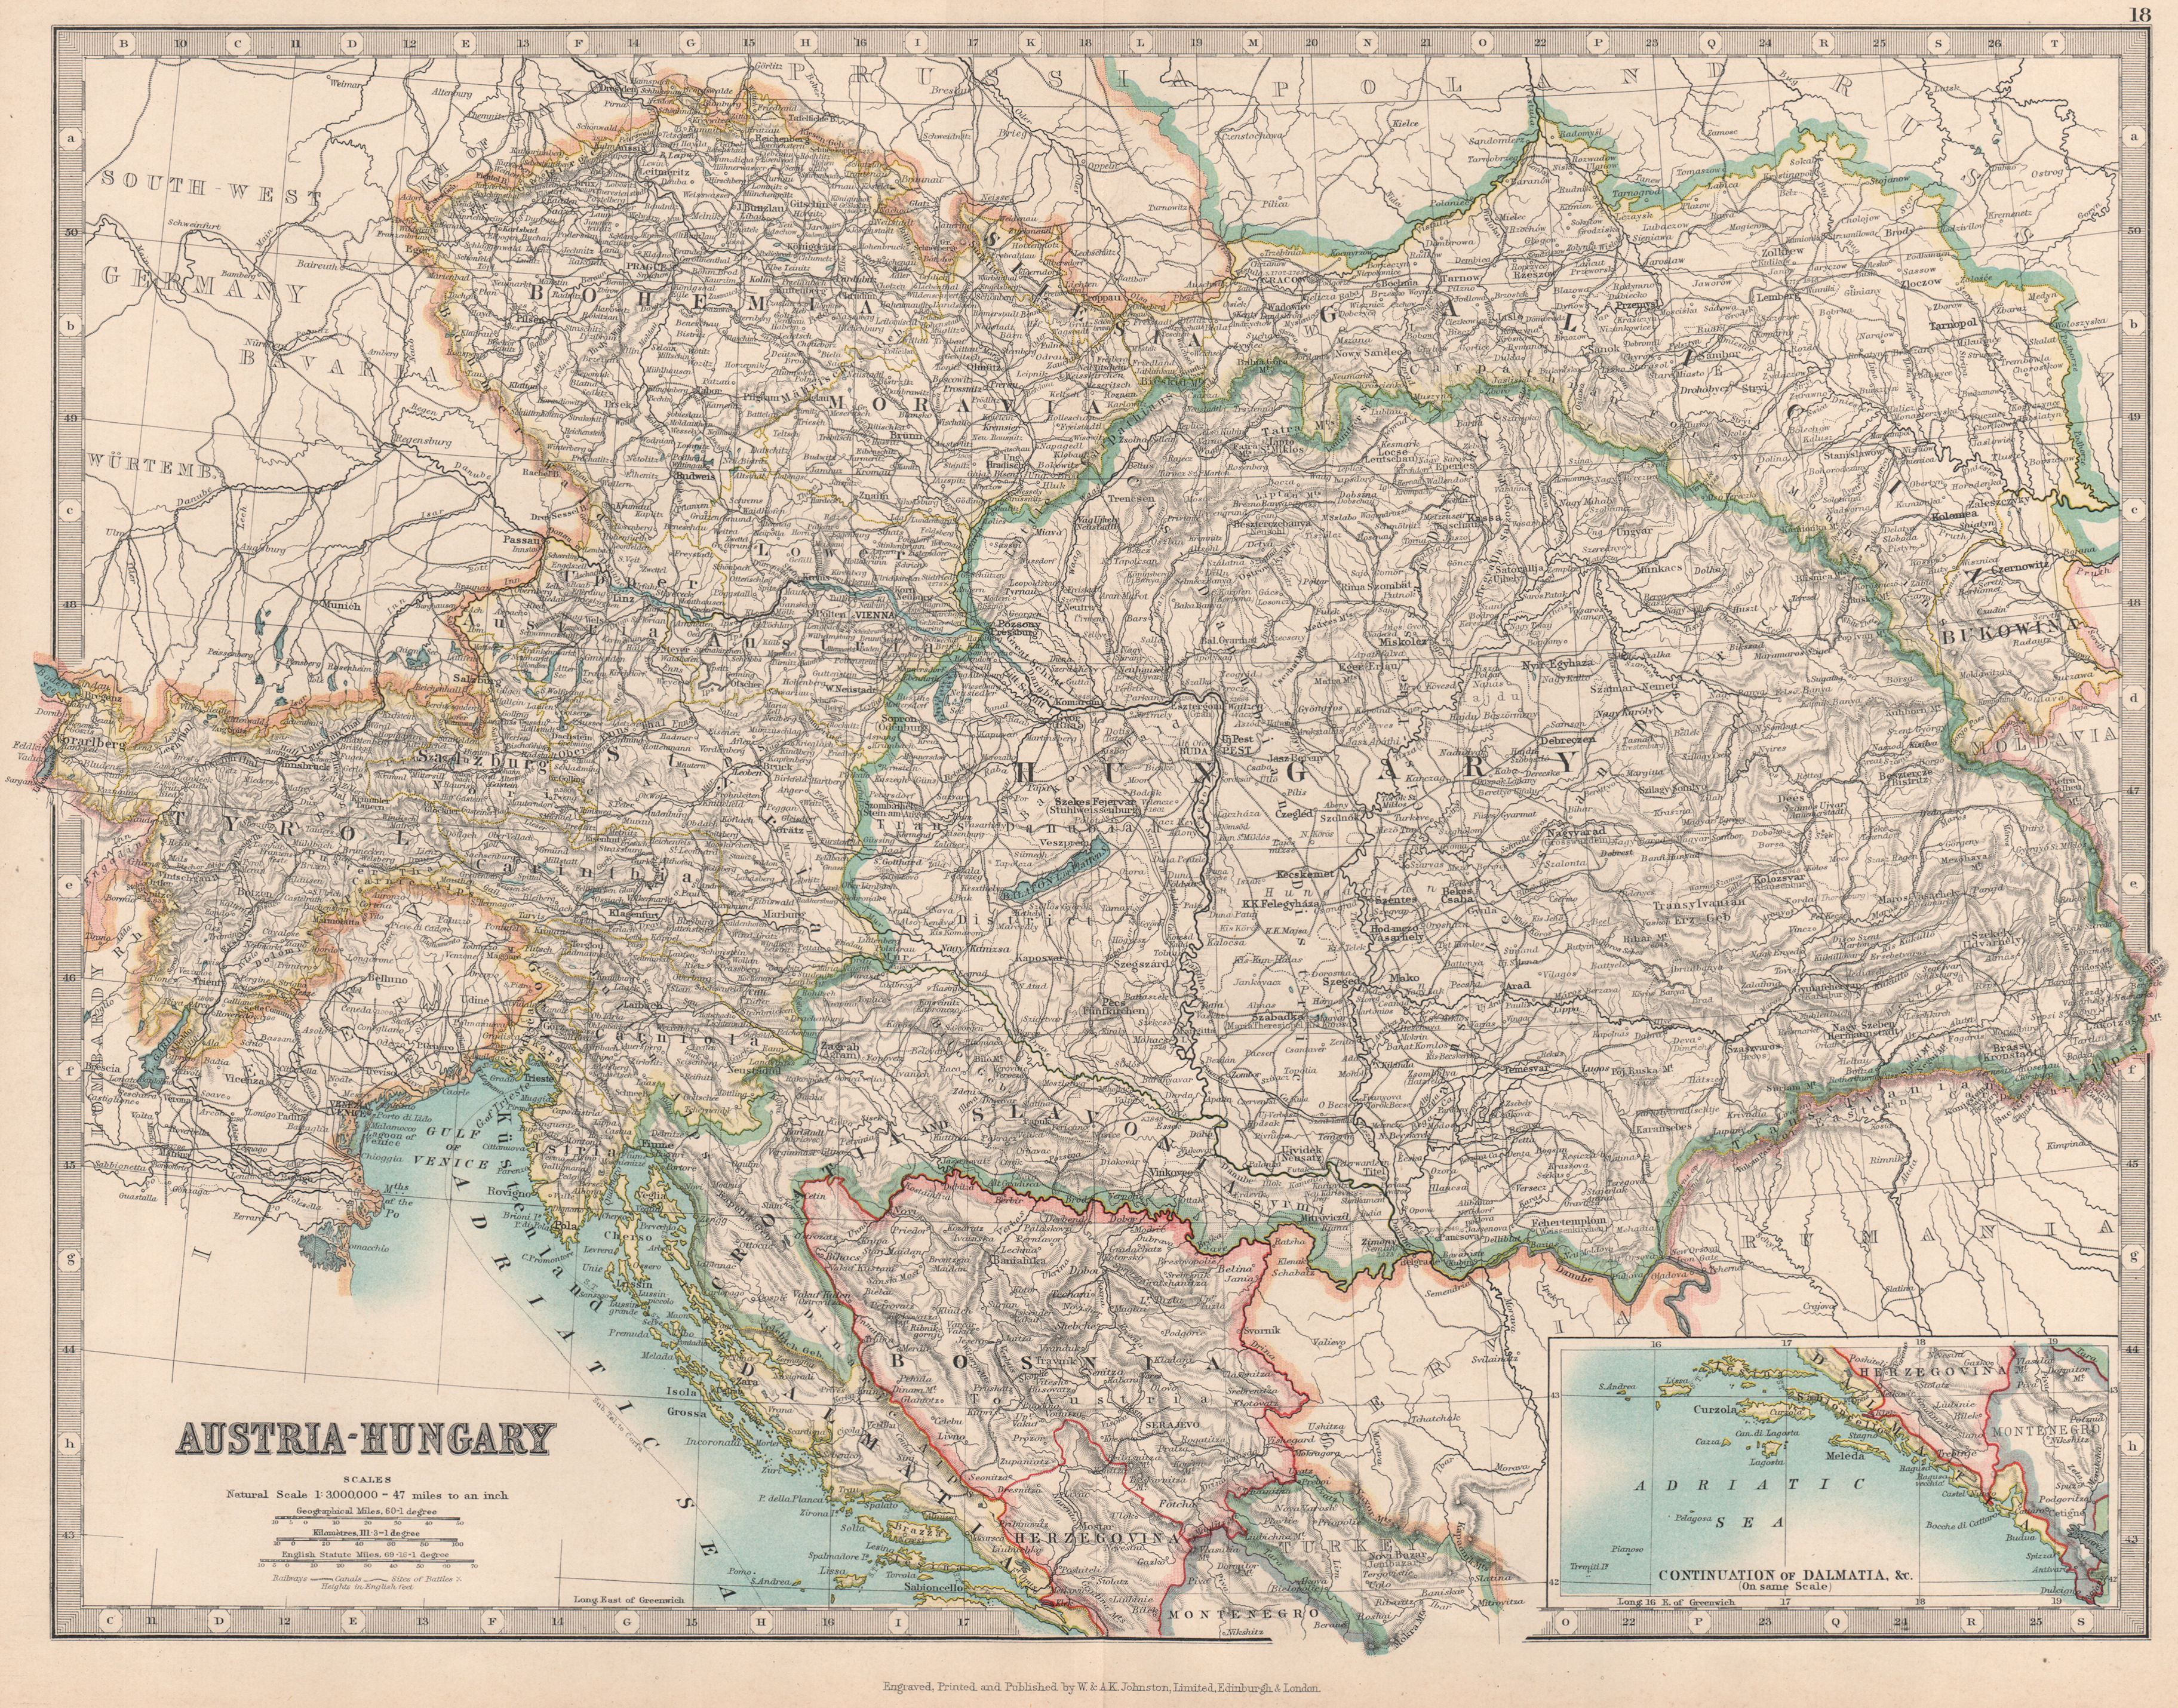 Associate Product AUSTRIA-HUNGARY. Dalmatian coast. Bosnia. Railways. JOHNSTON 1912 old map